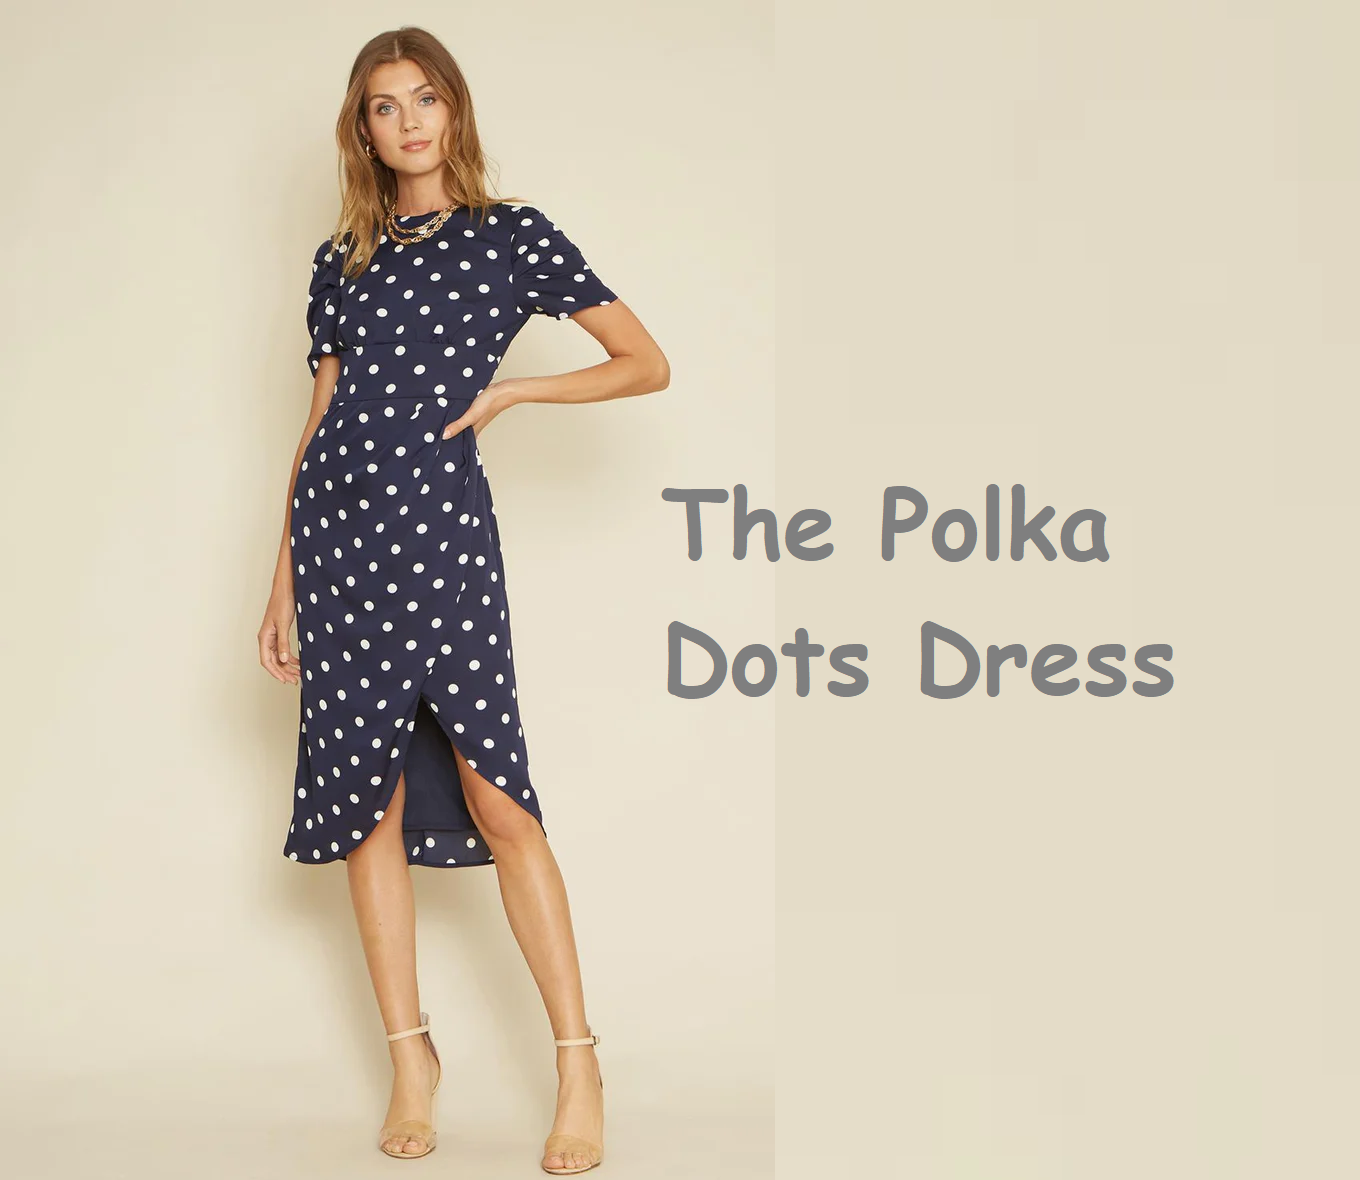 The polka dot dress